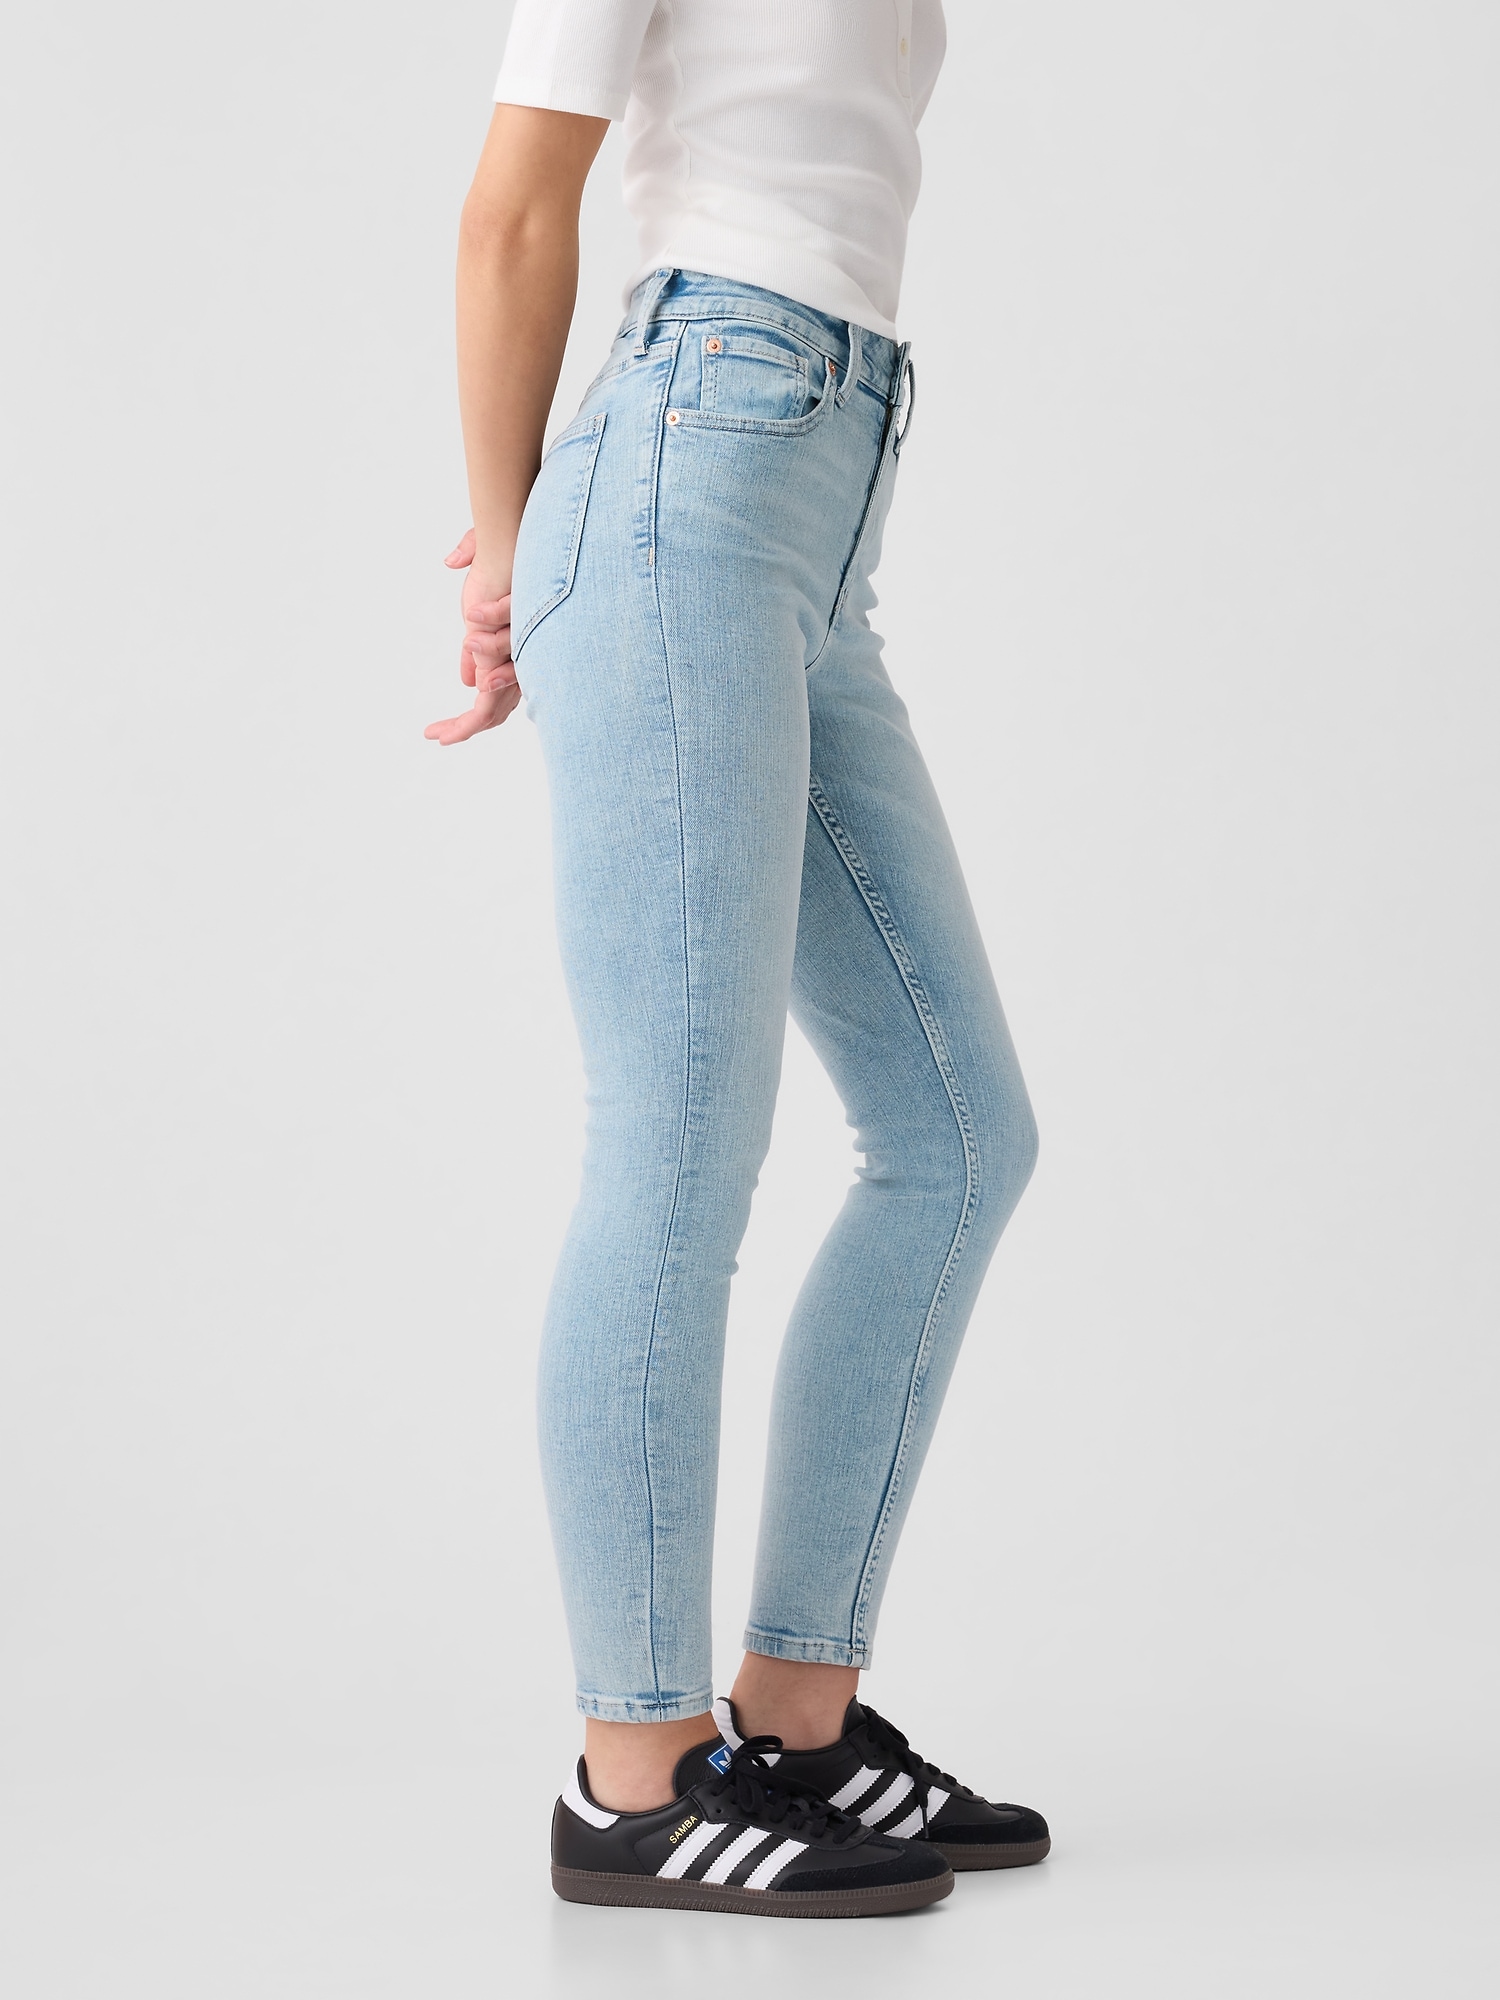 GAP Factory style jeans, “universal legging”.